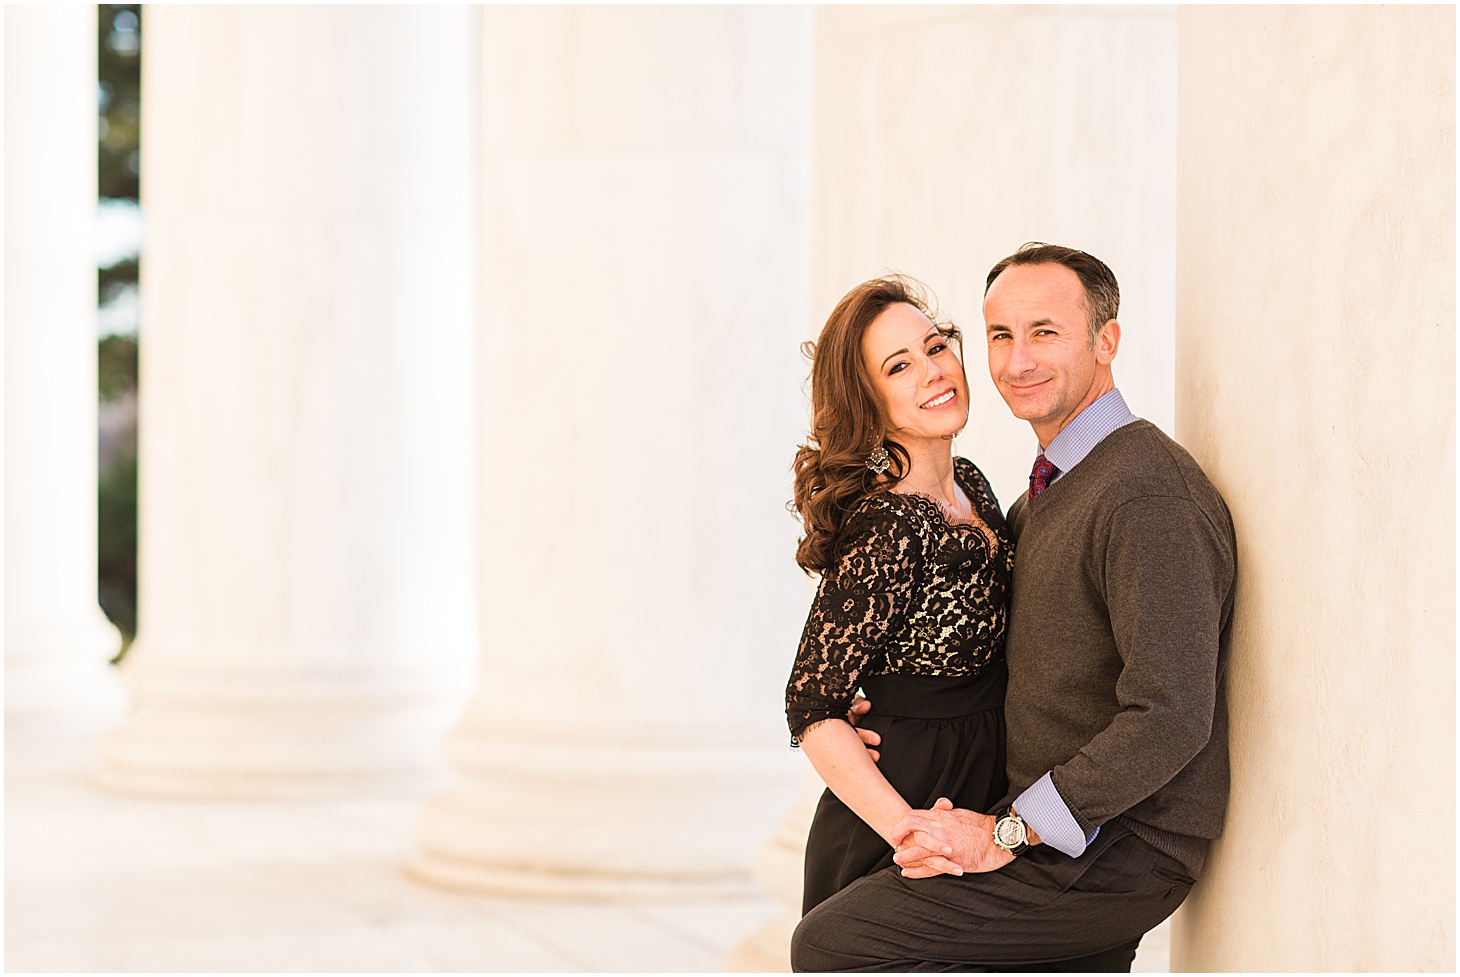 Sunset Engagement Portraits at Jefferson Memorial, Sarah Bradshaw Photography, Washington DC Wedding Photographer